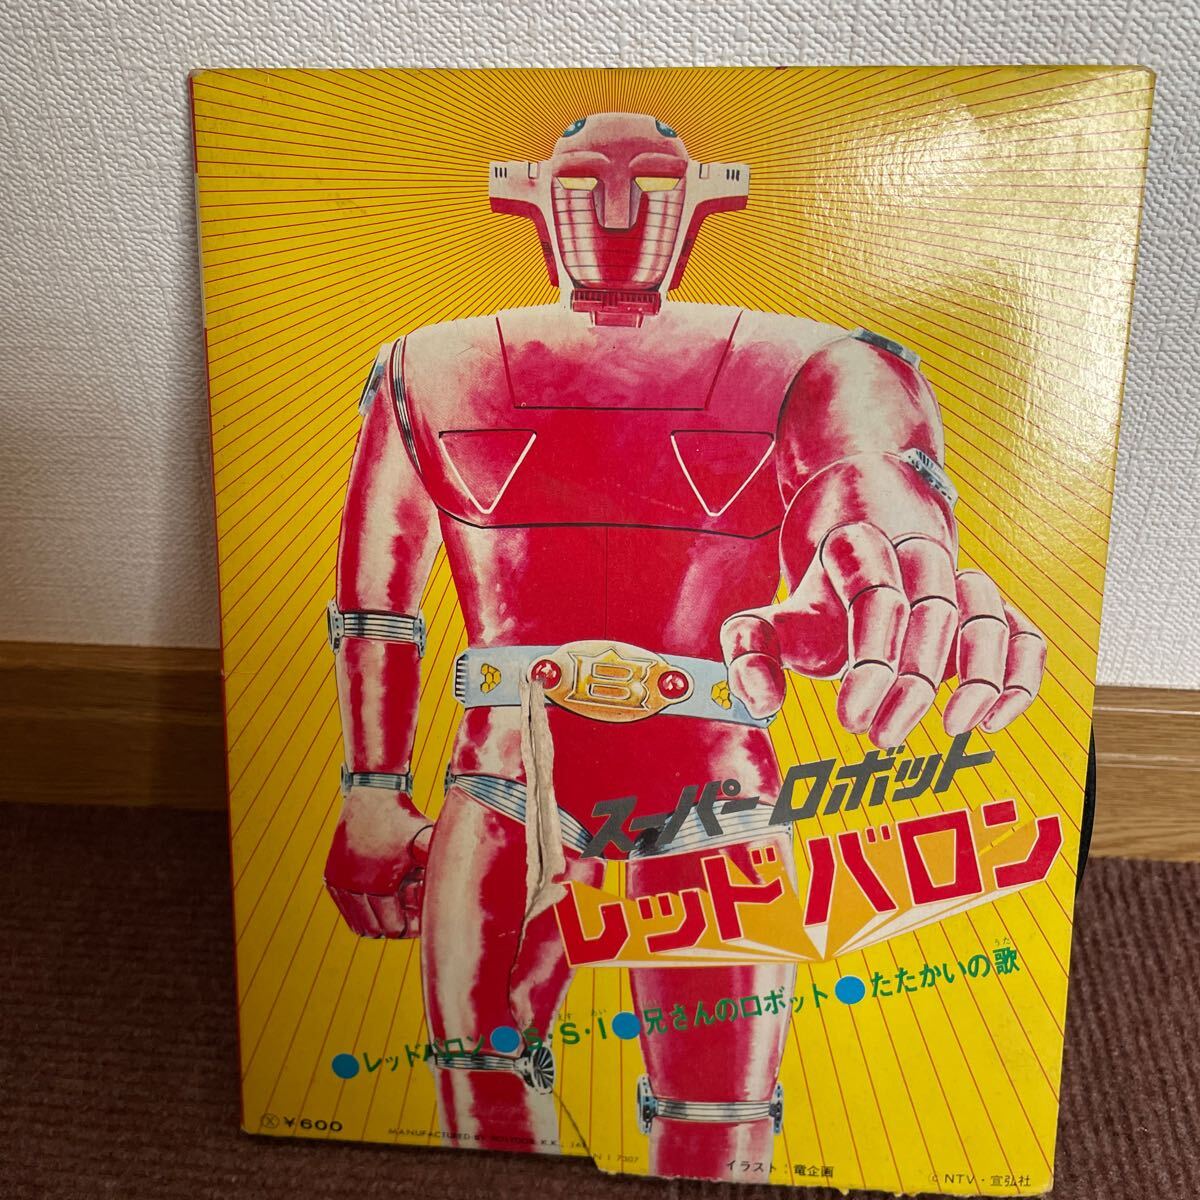  Super Robot Red Baron запись polydot